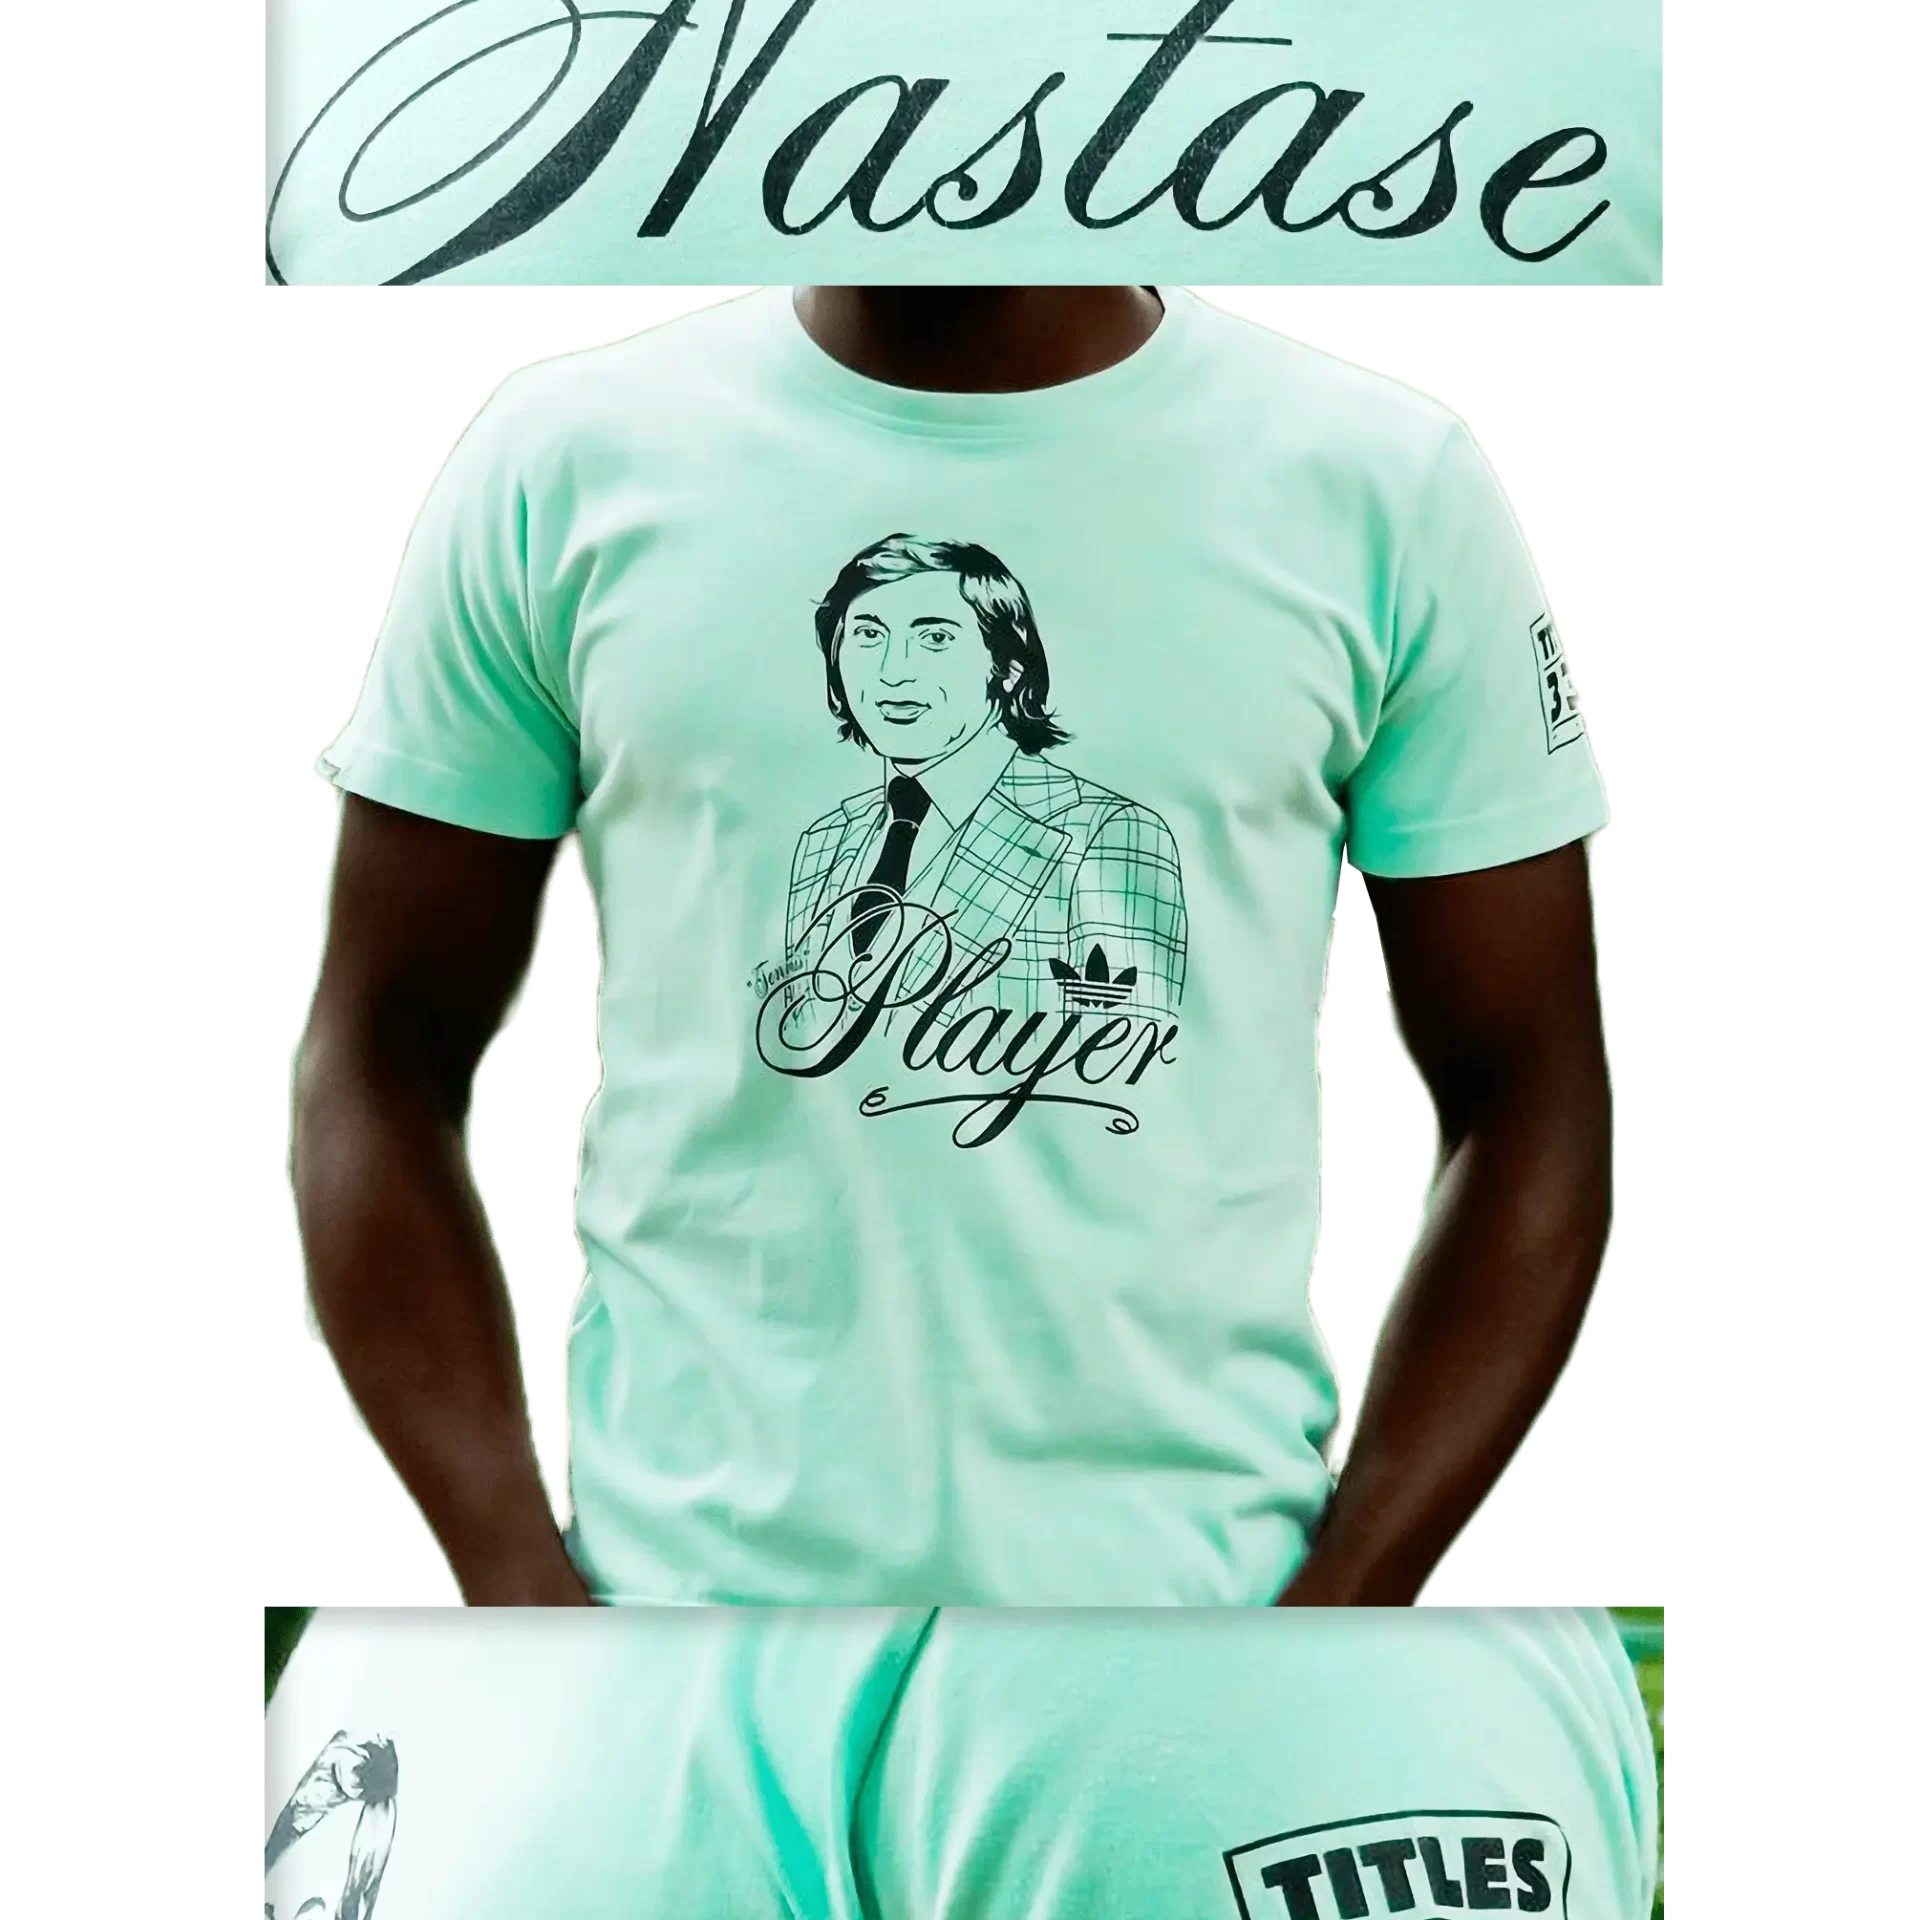 Men's 2006 Ilie Nastase Player's Club T-Shirt by Adidas: Stoic (EnLawded.com file #lmchk83853ip2y125205kg9st)